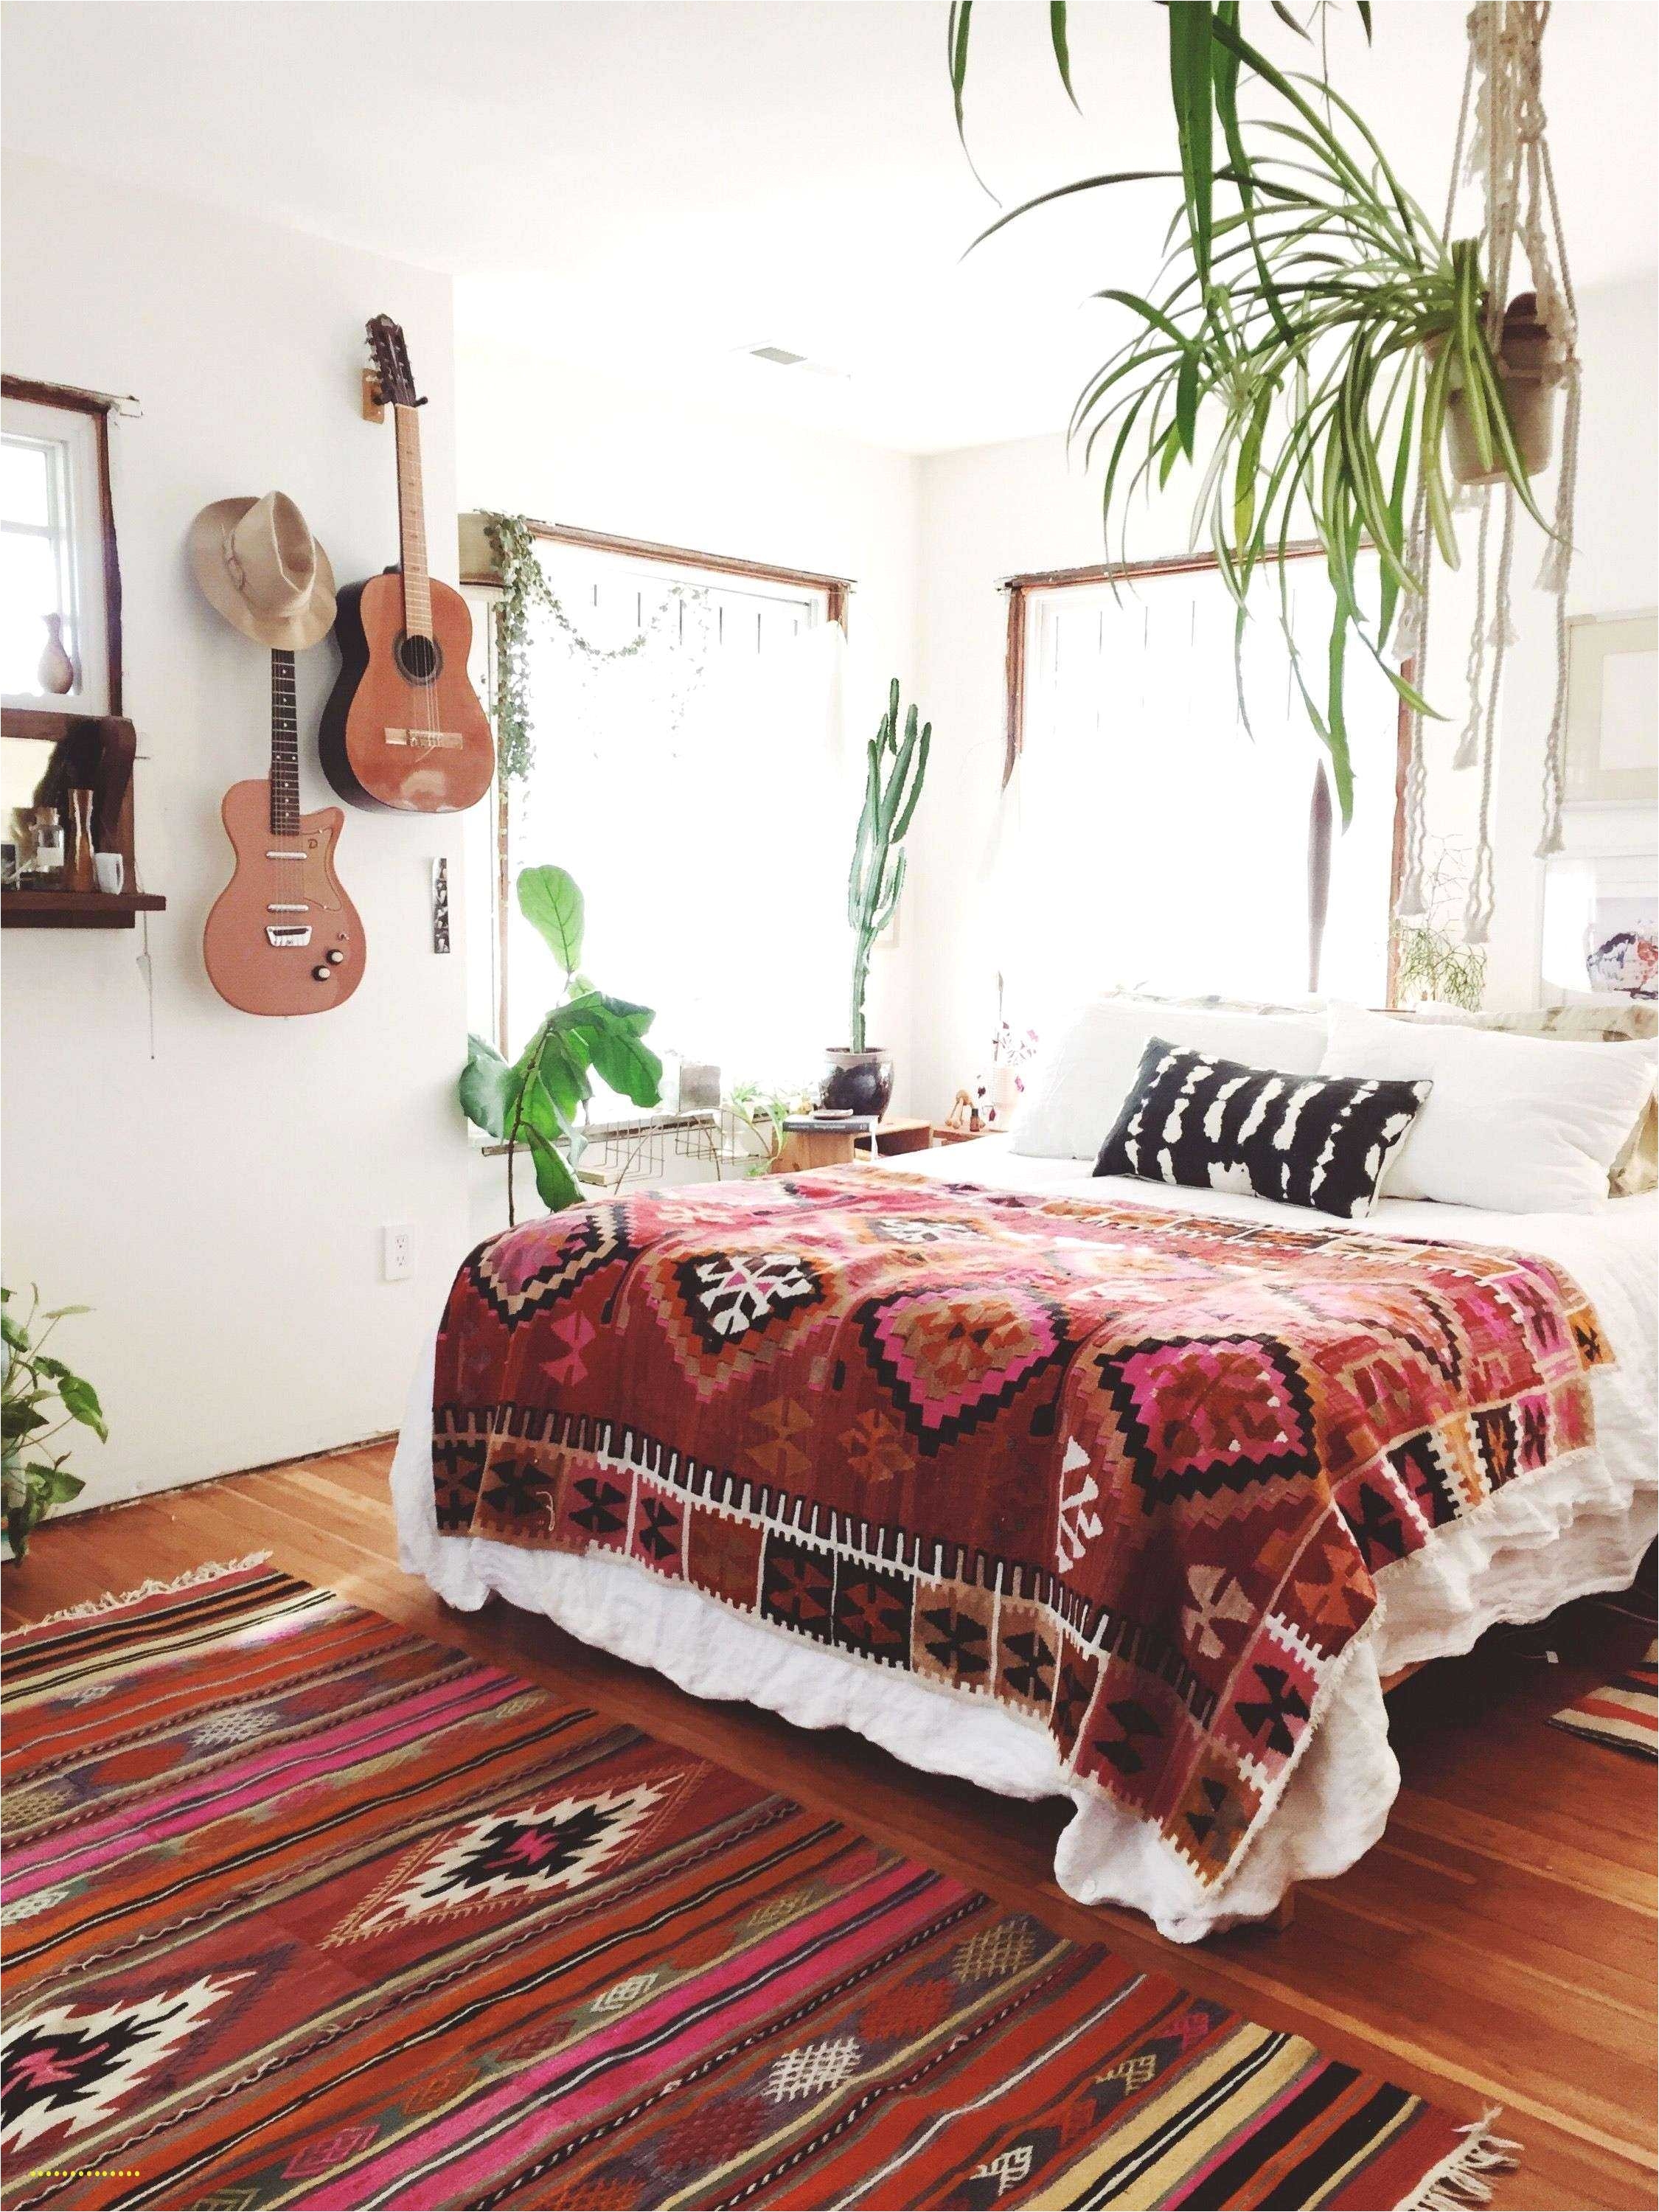 Cool Teenage Bedroom Ideas Awesome Cool Teenage Rooms